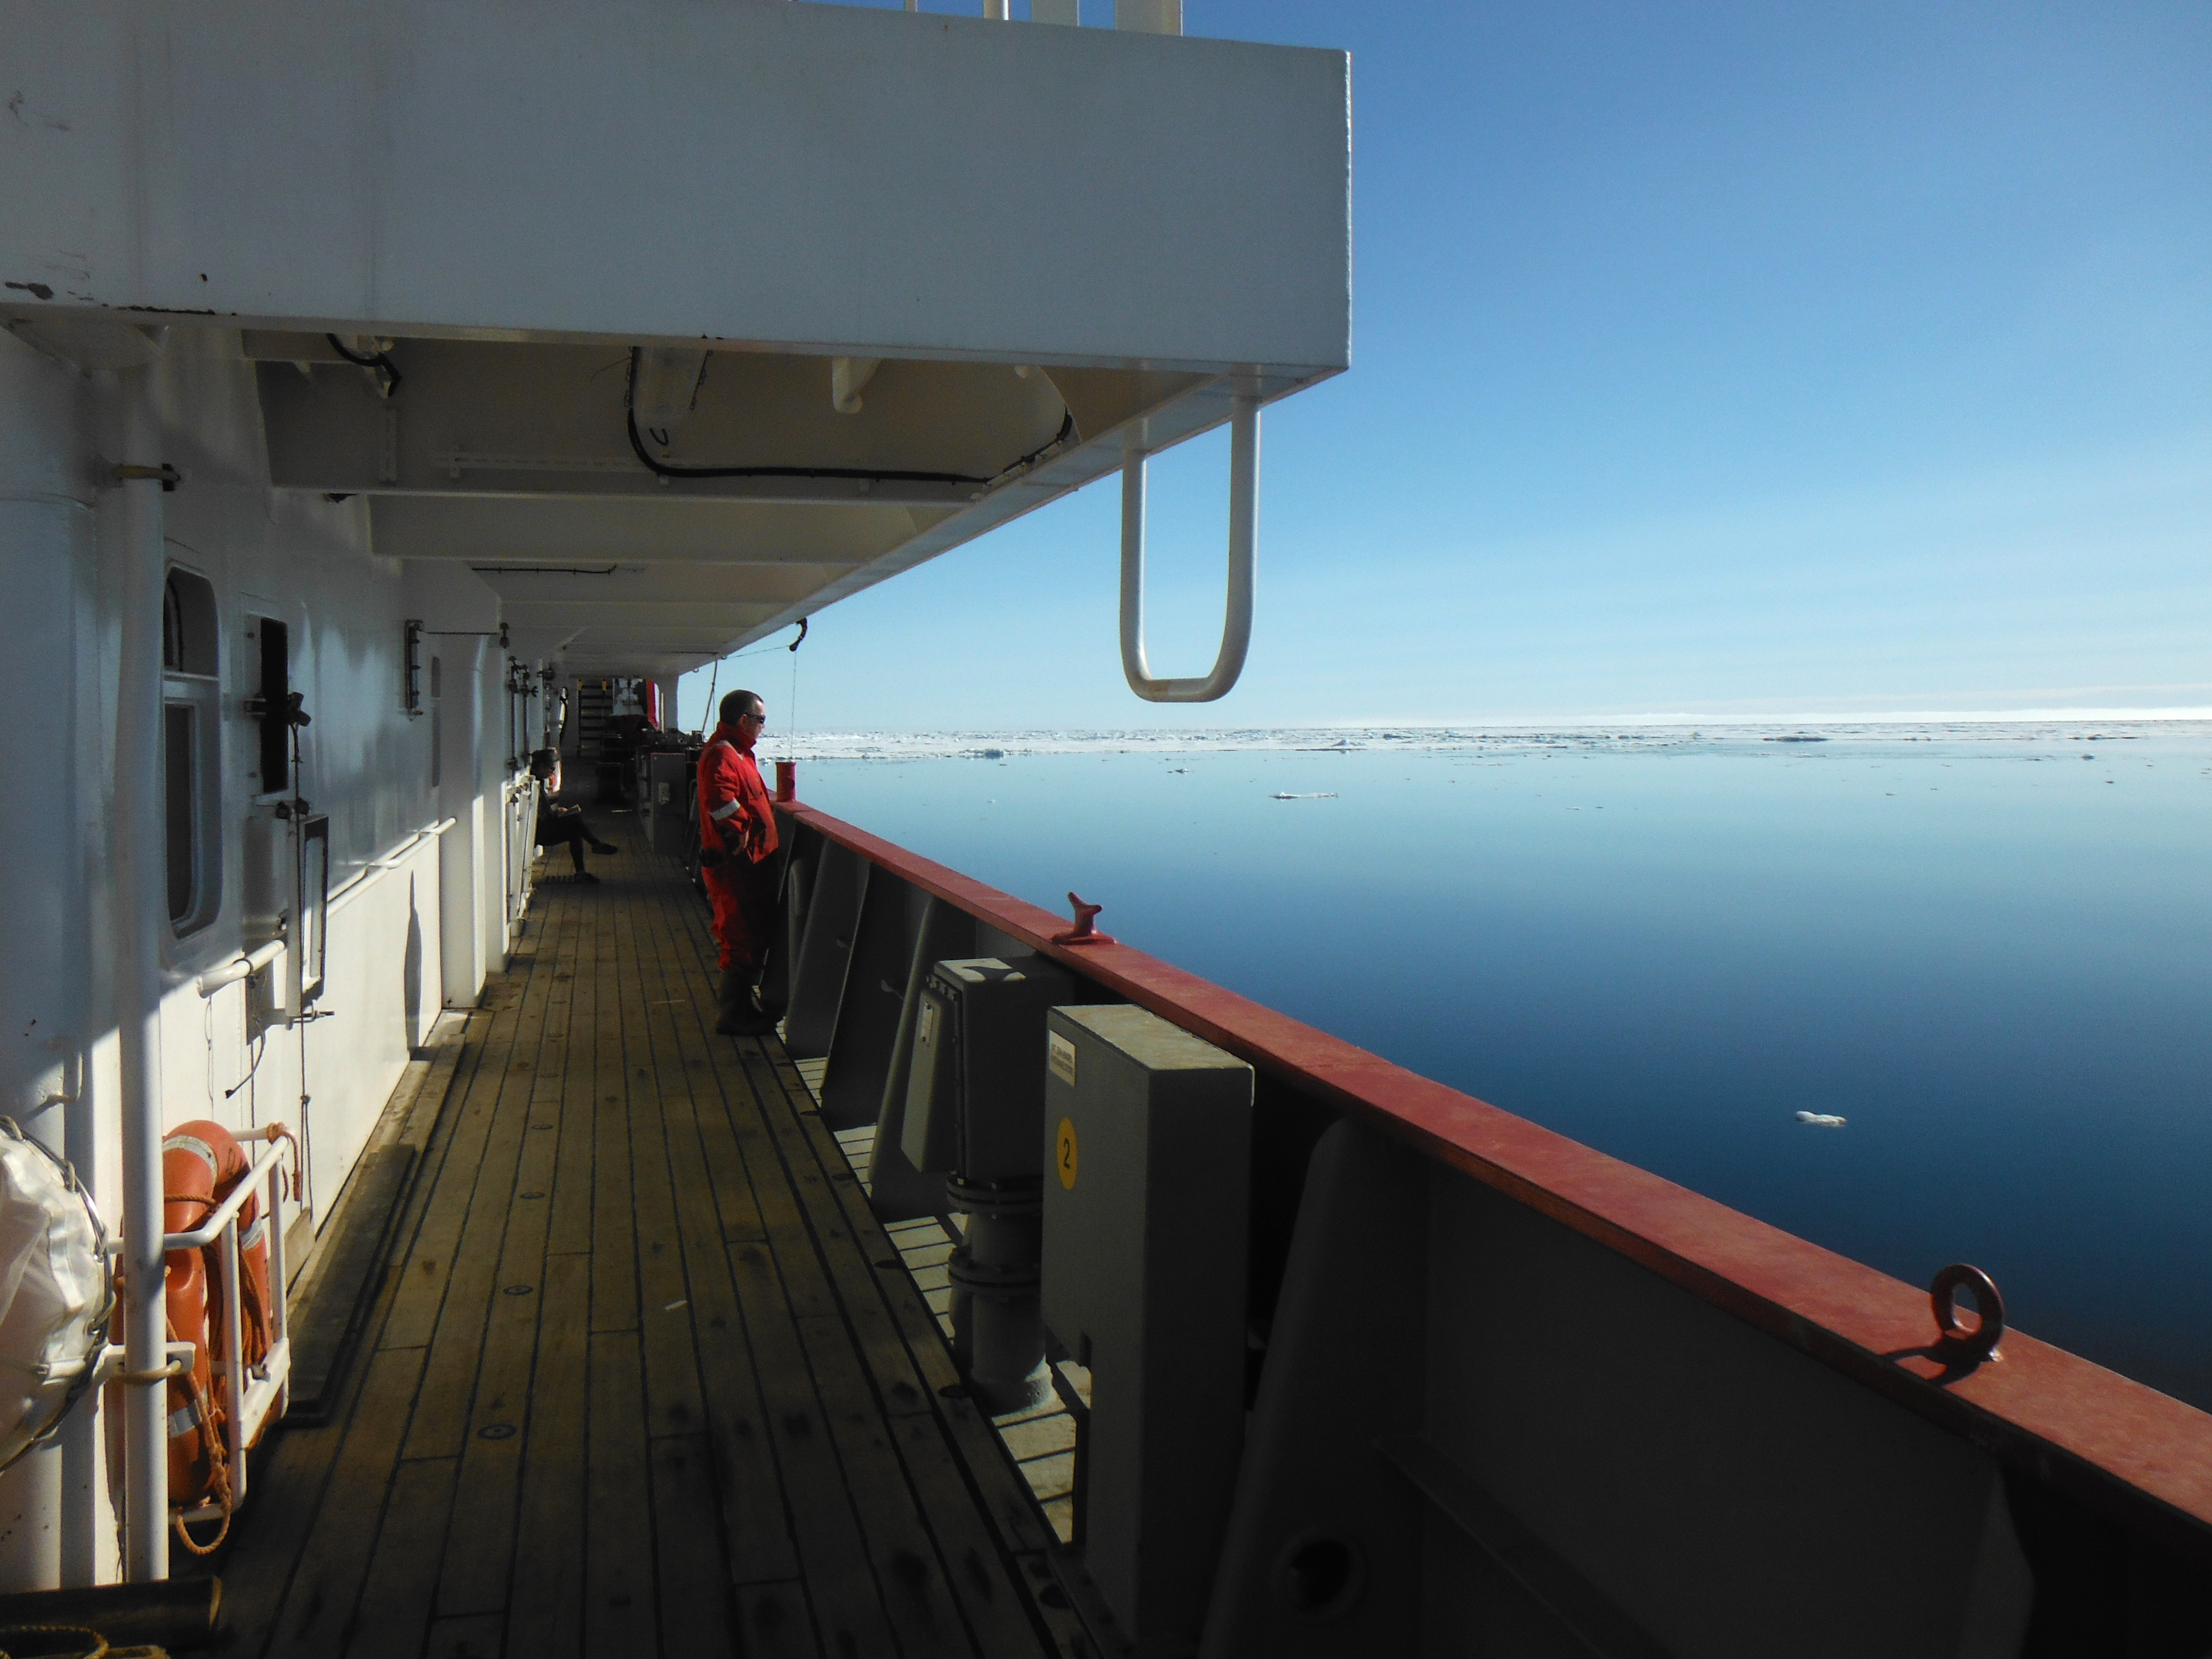 Onboard the RRS James Clark Ross in the Barents Sea (JR16006, 2017) Credit: Tim Brand, SAMS